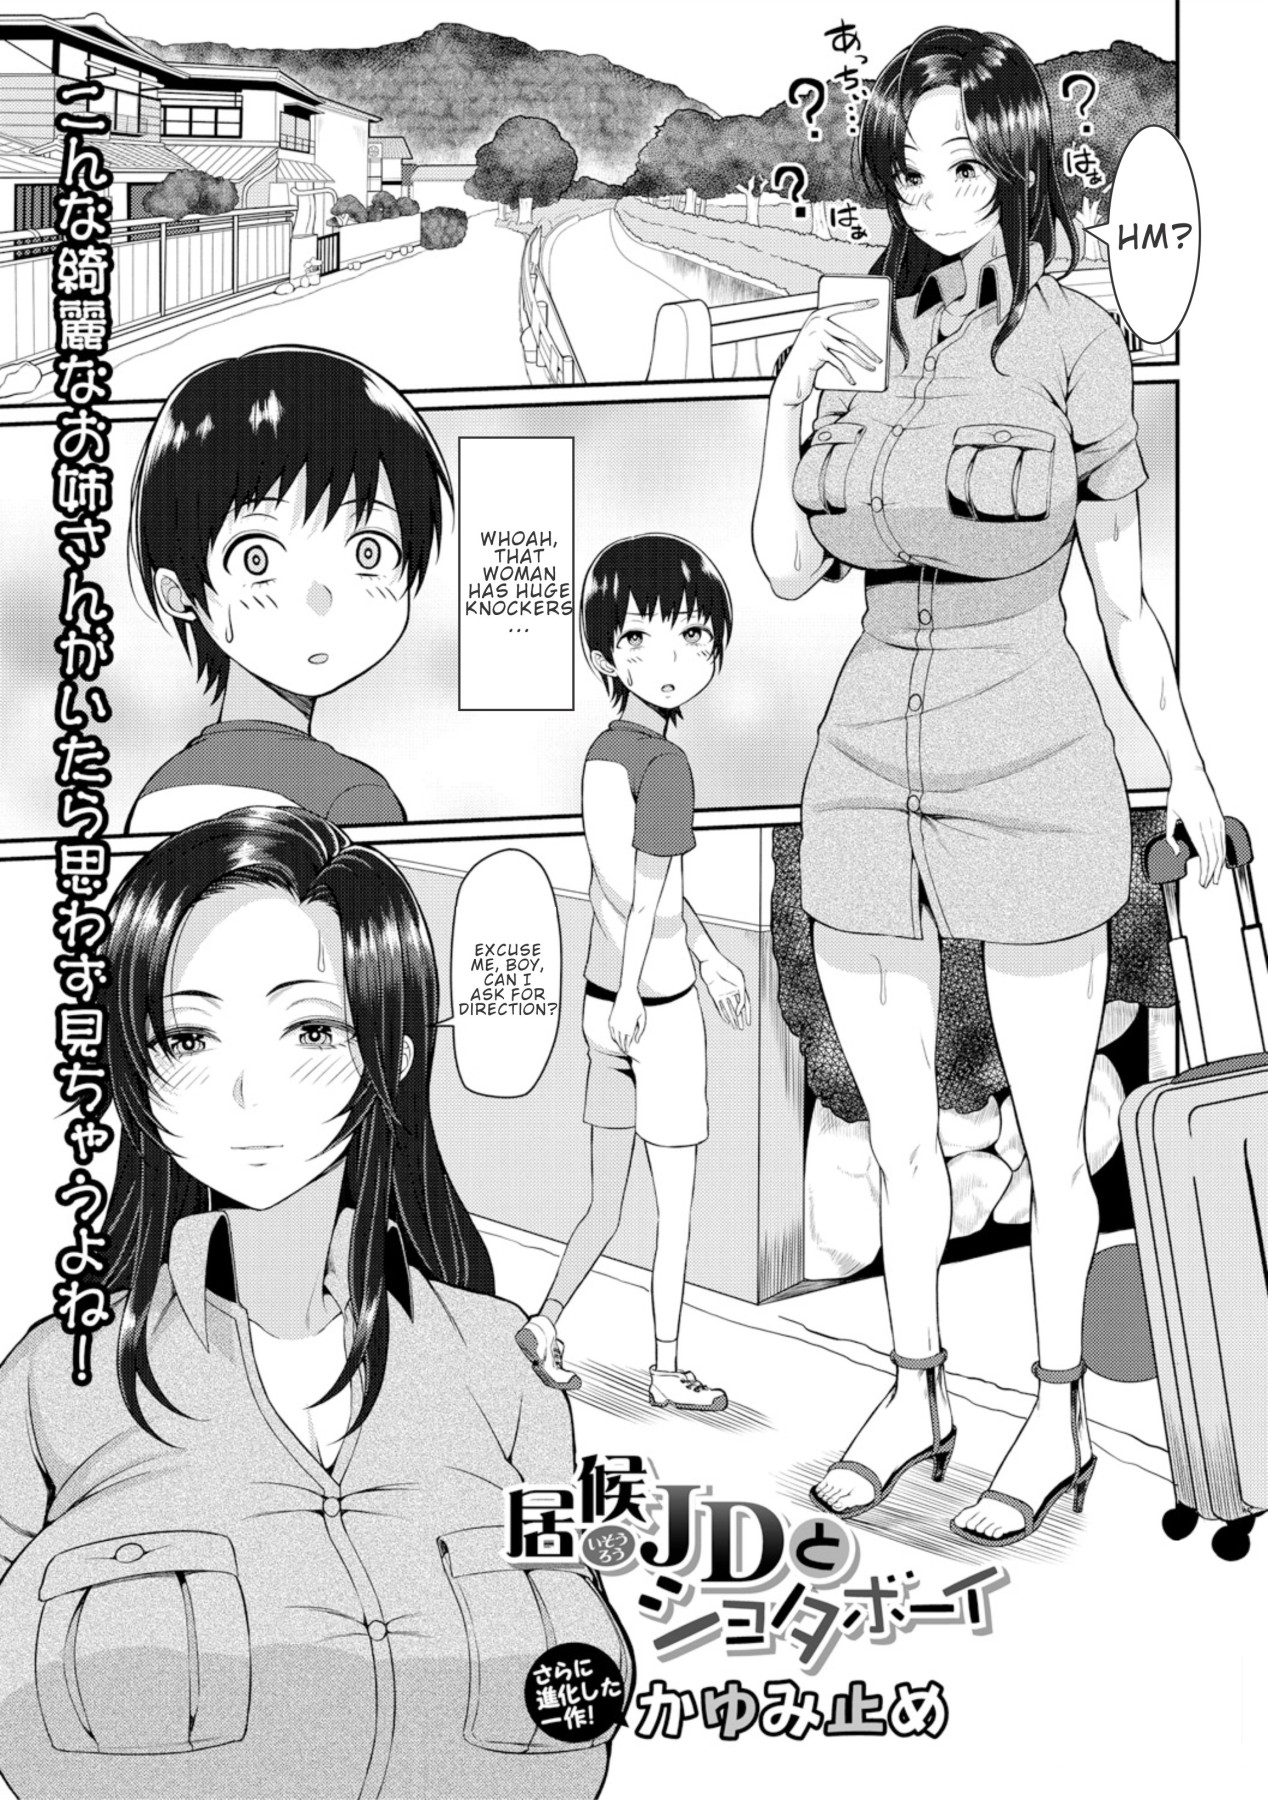 Hentai Manga Comic-Freeloader College Girl and Shota Boy-Read-1